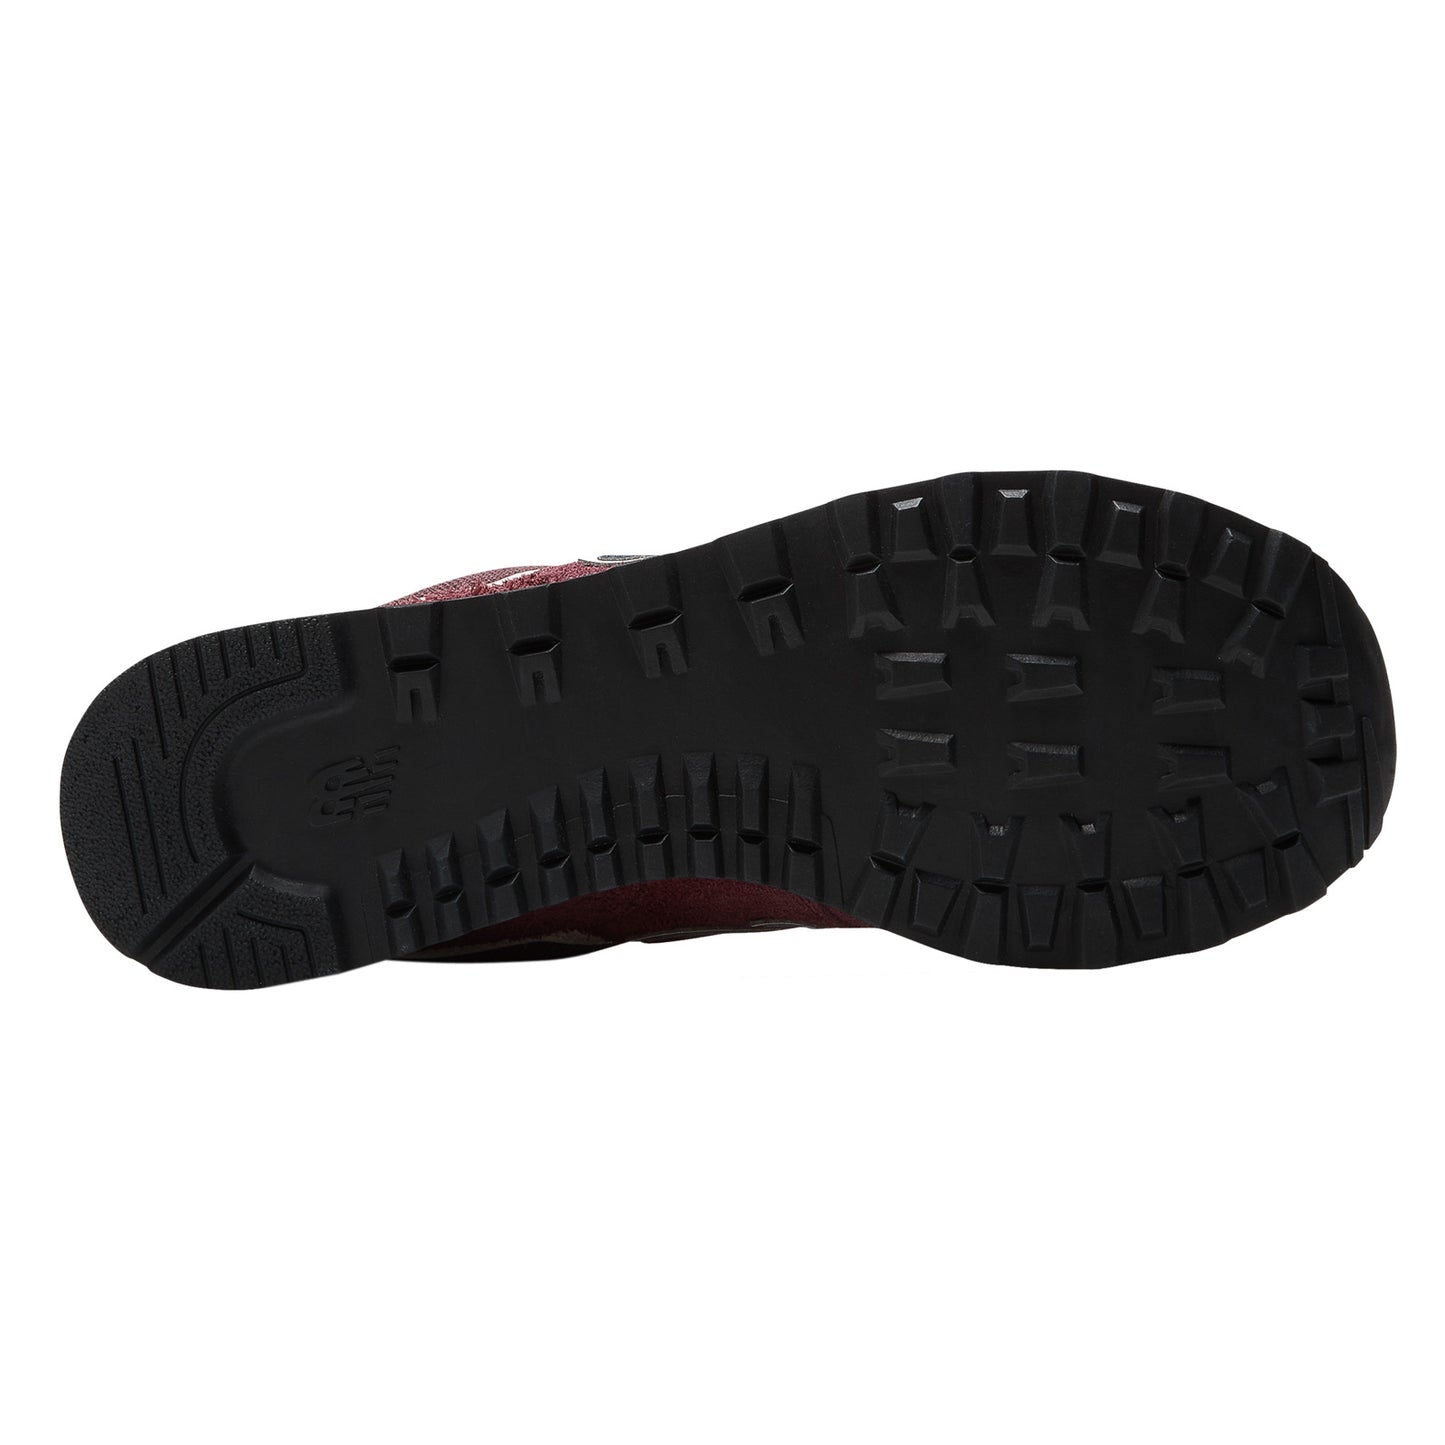 Peltz Shoes  Unisex New Balance 574v2 Sneaker RED/NAVY U574RX2